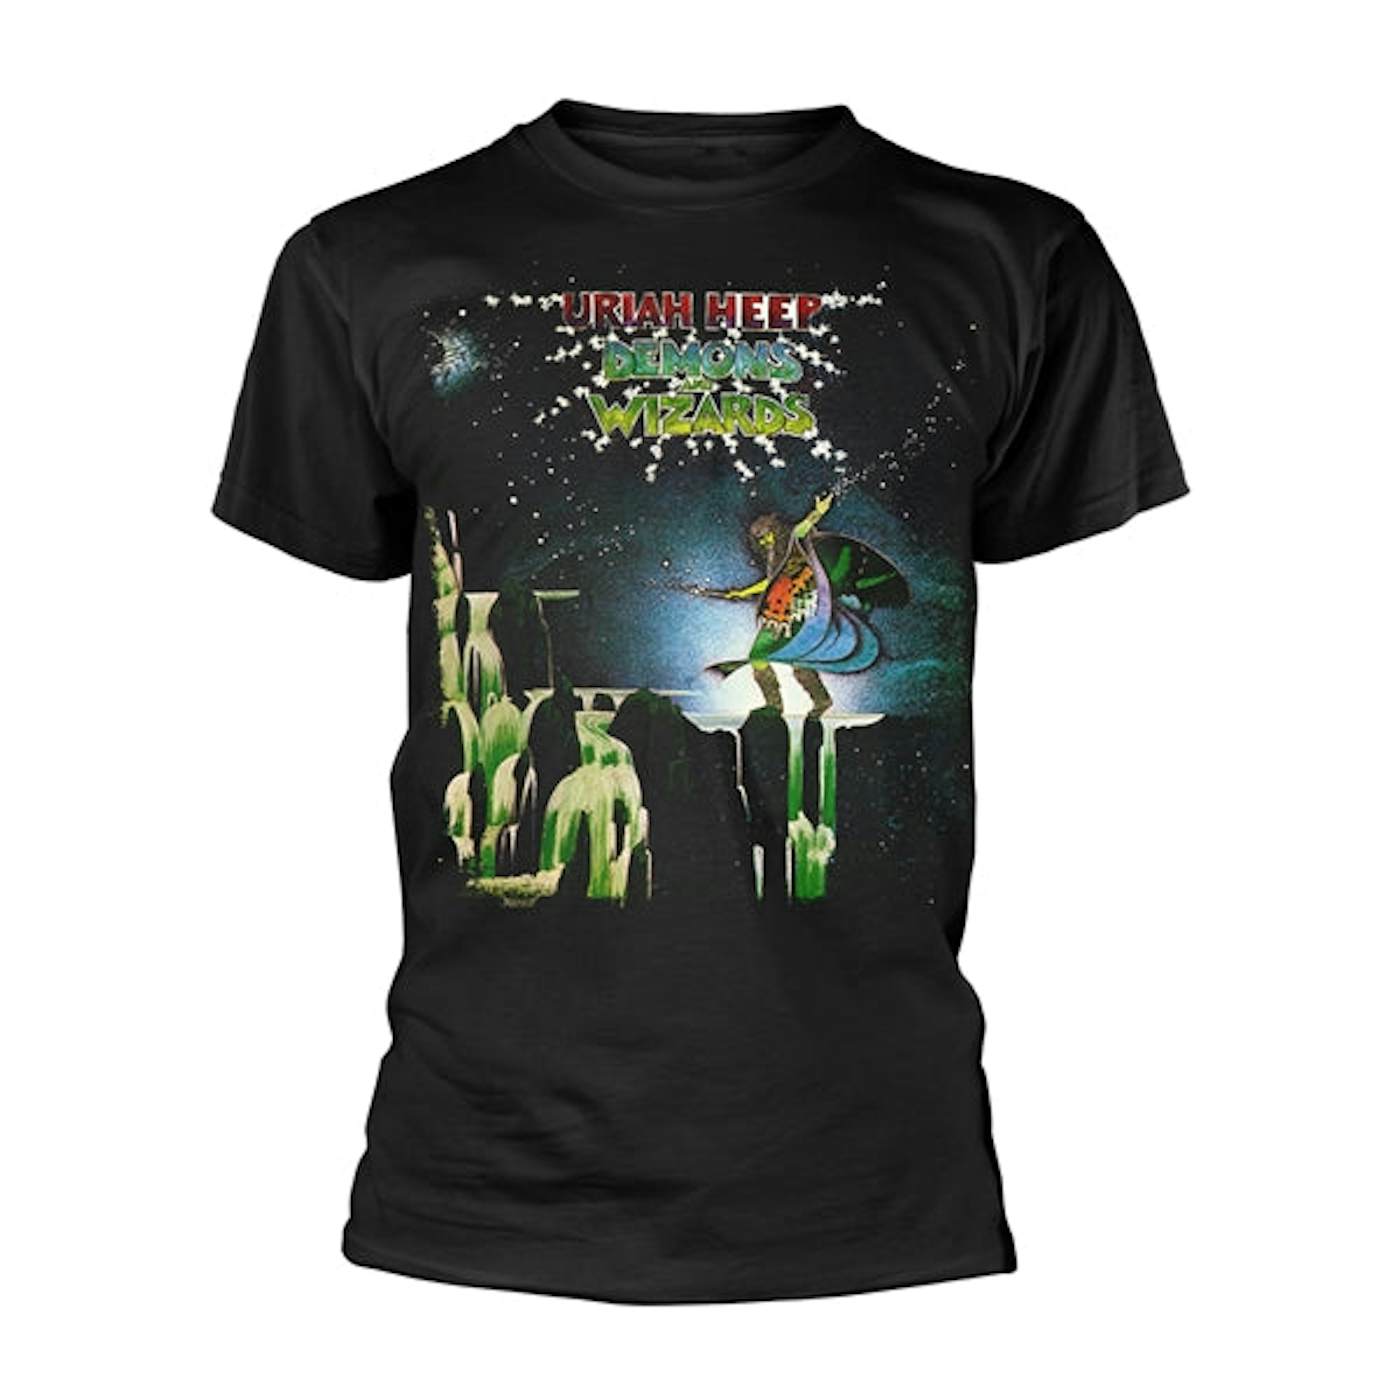 Uriah Heep T-Shirt - Demons And Wizards (Black)